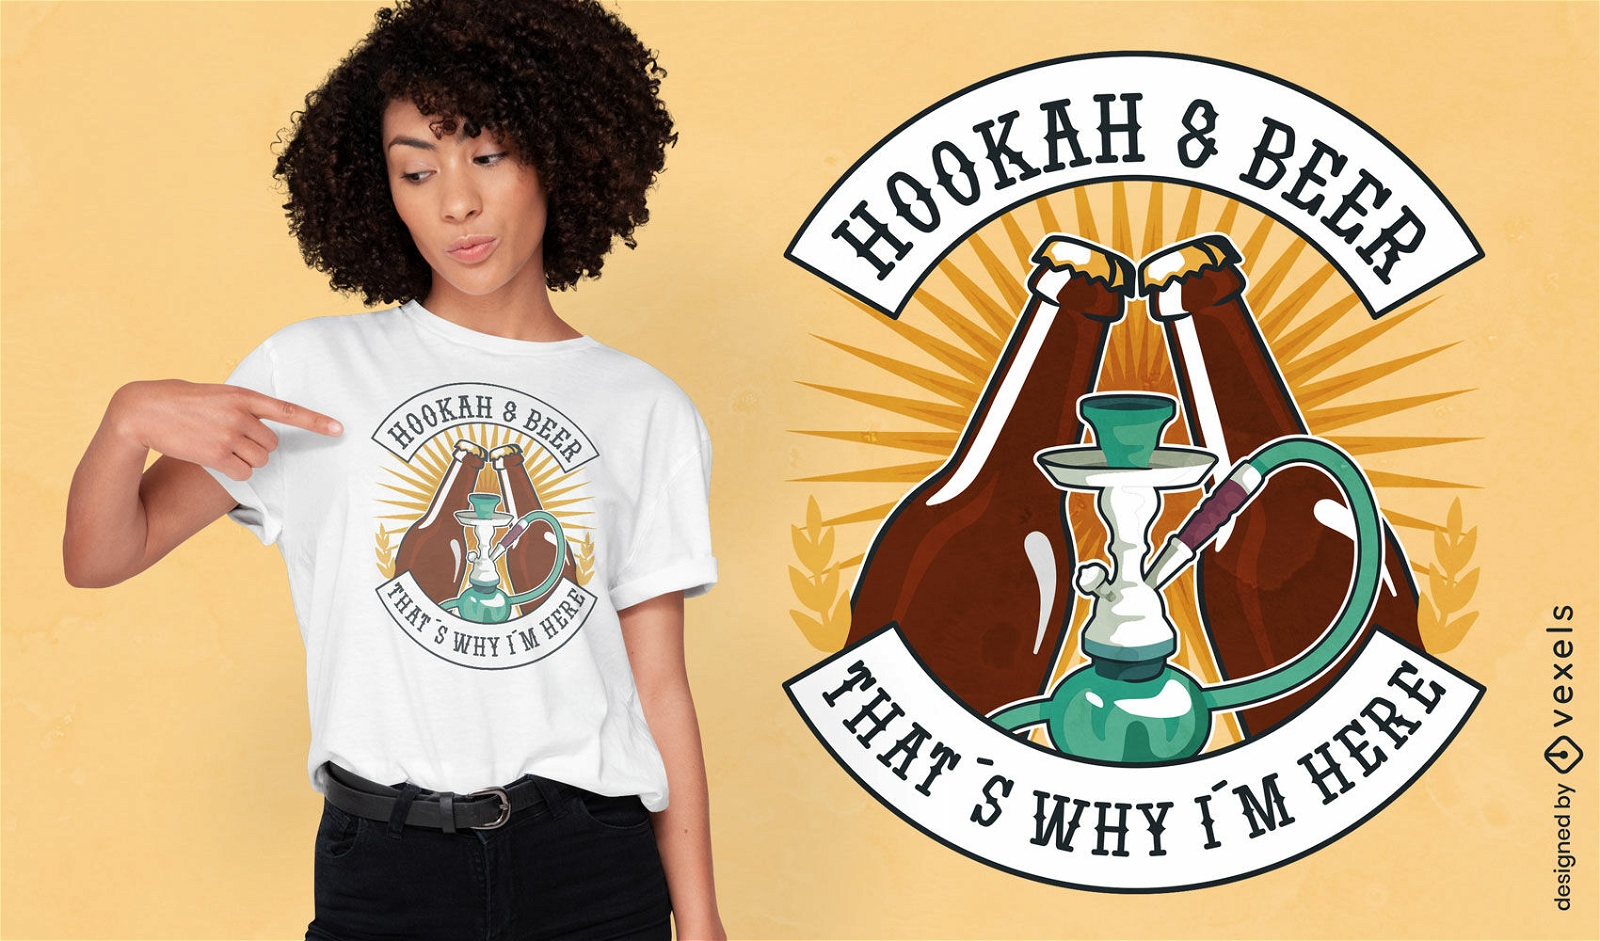 Beer drinks and hookah t-shirt design